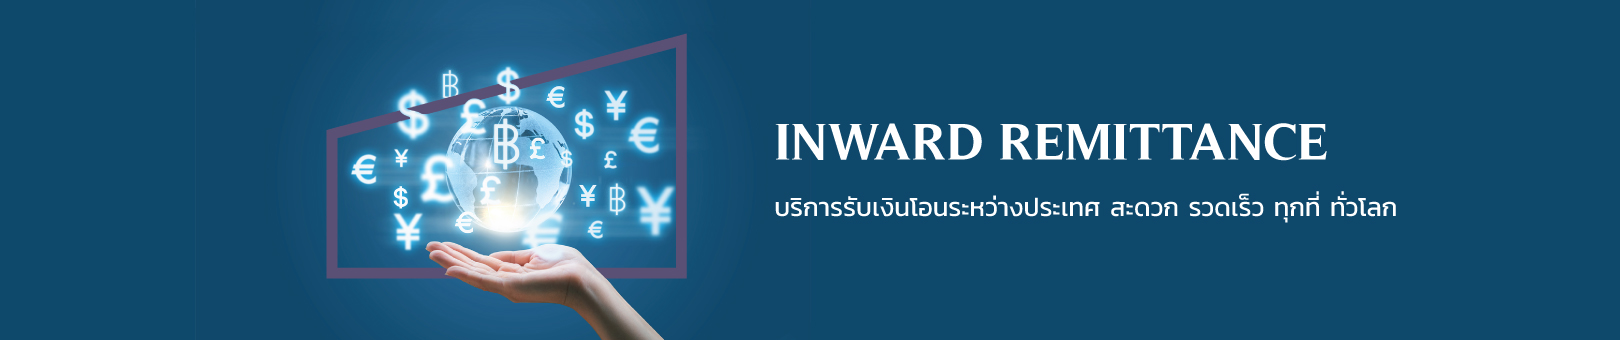 Inward-Remittance_1620x340